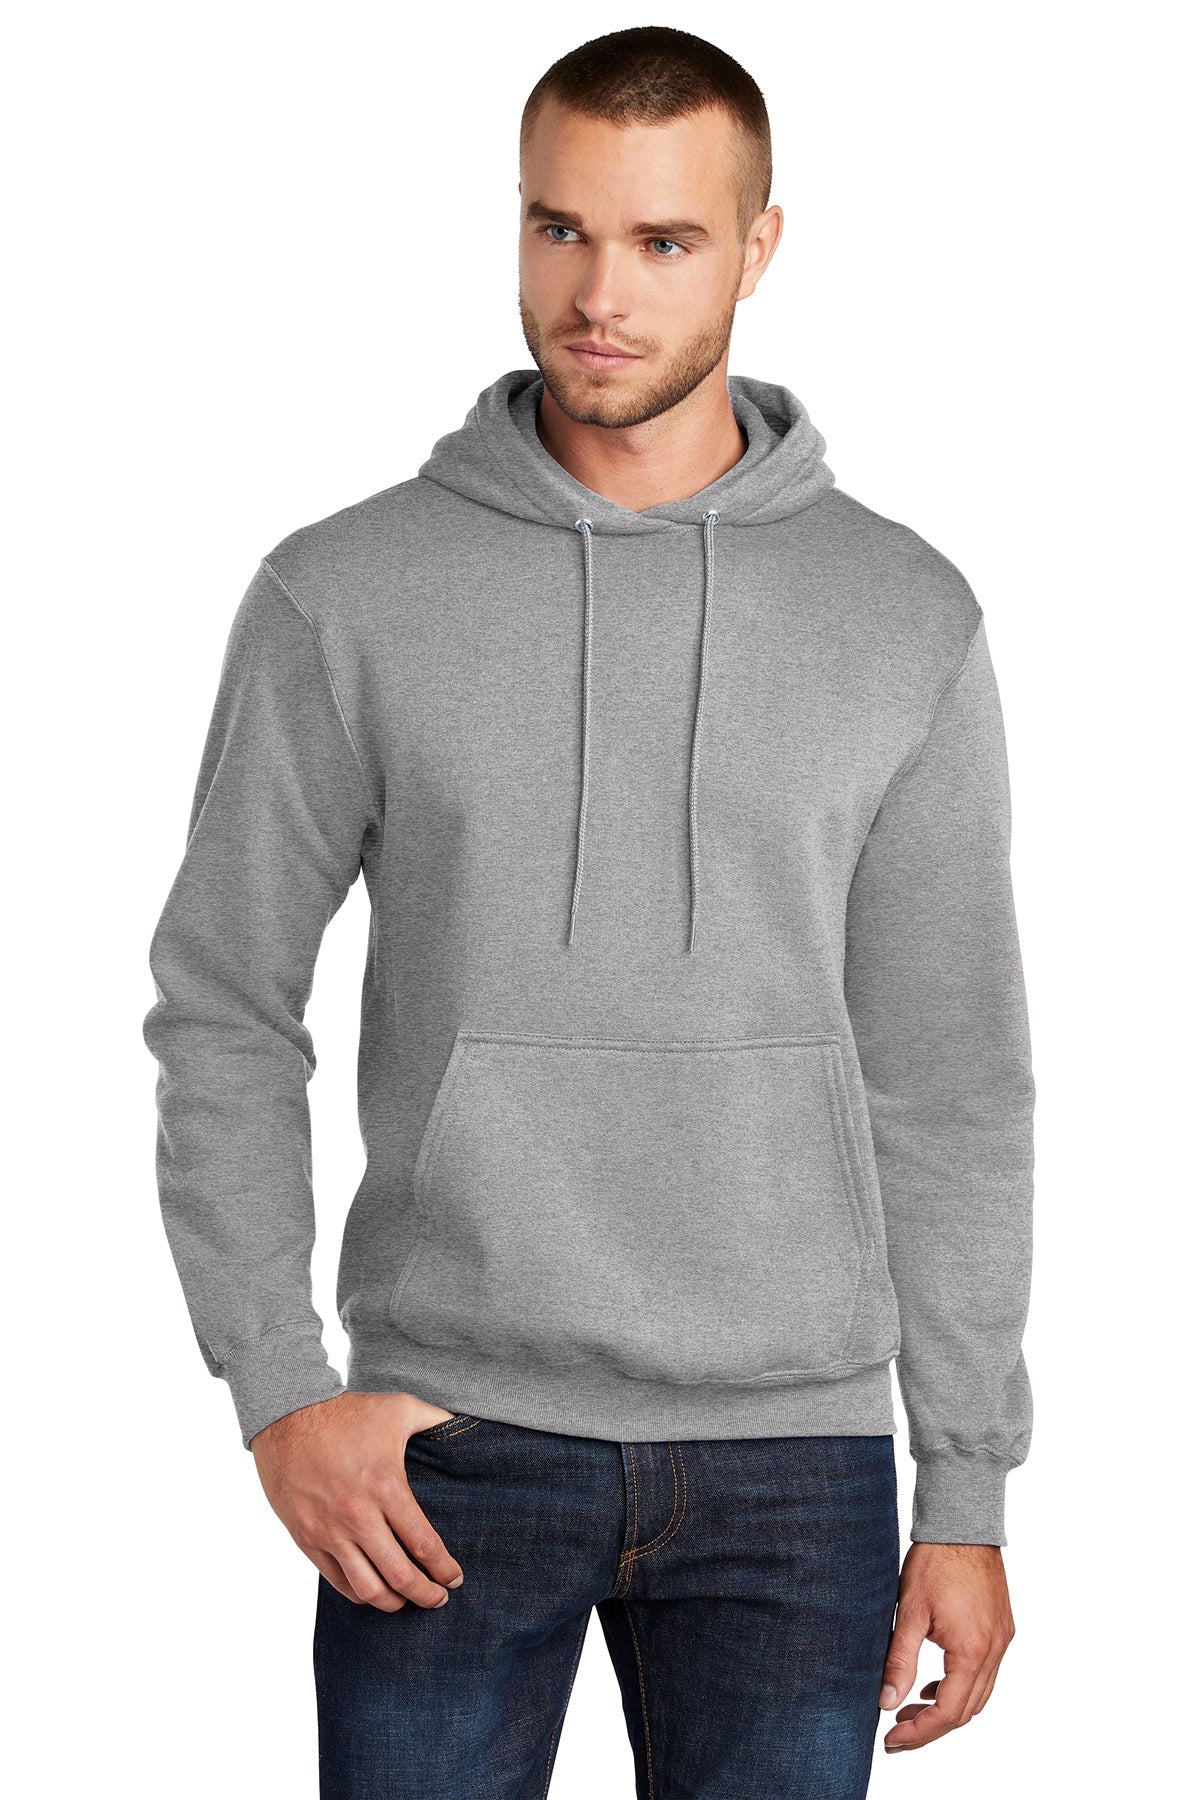 Core Fleece Pullover Hooded Sweatshirt. PC78H - BT Imprintables Shirts